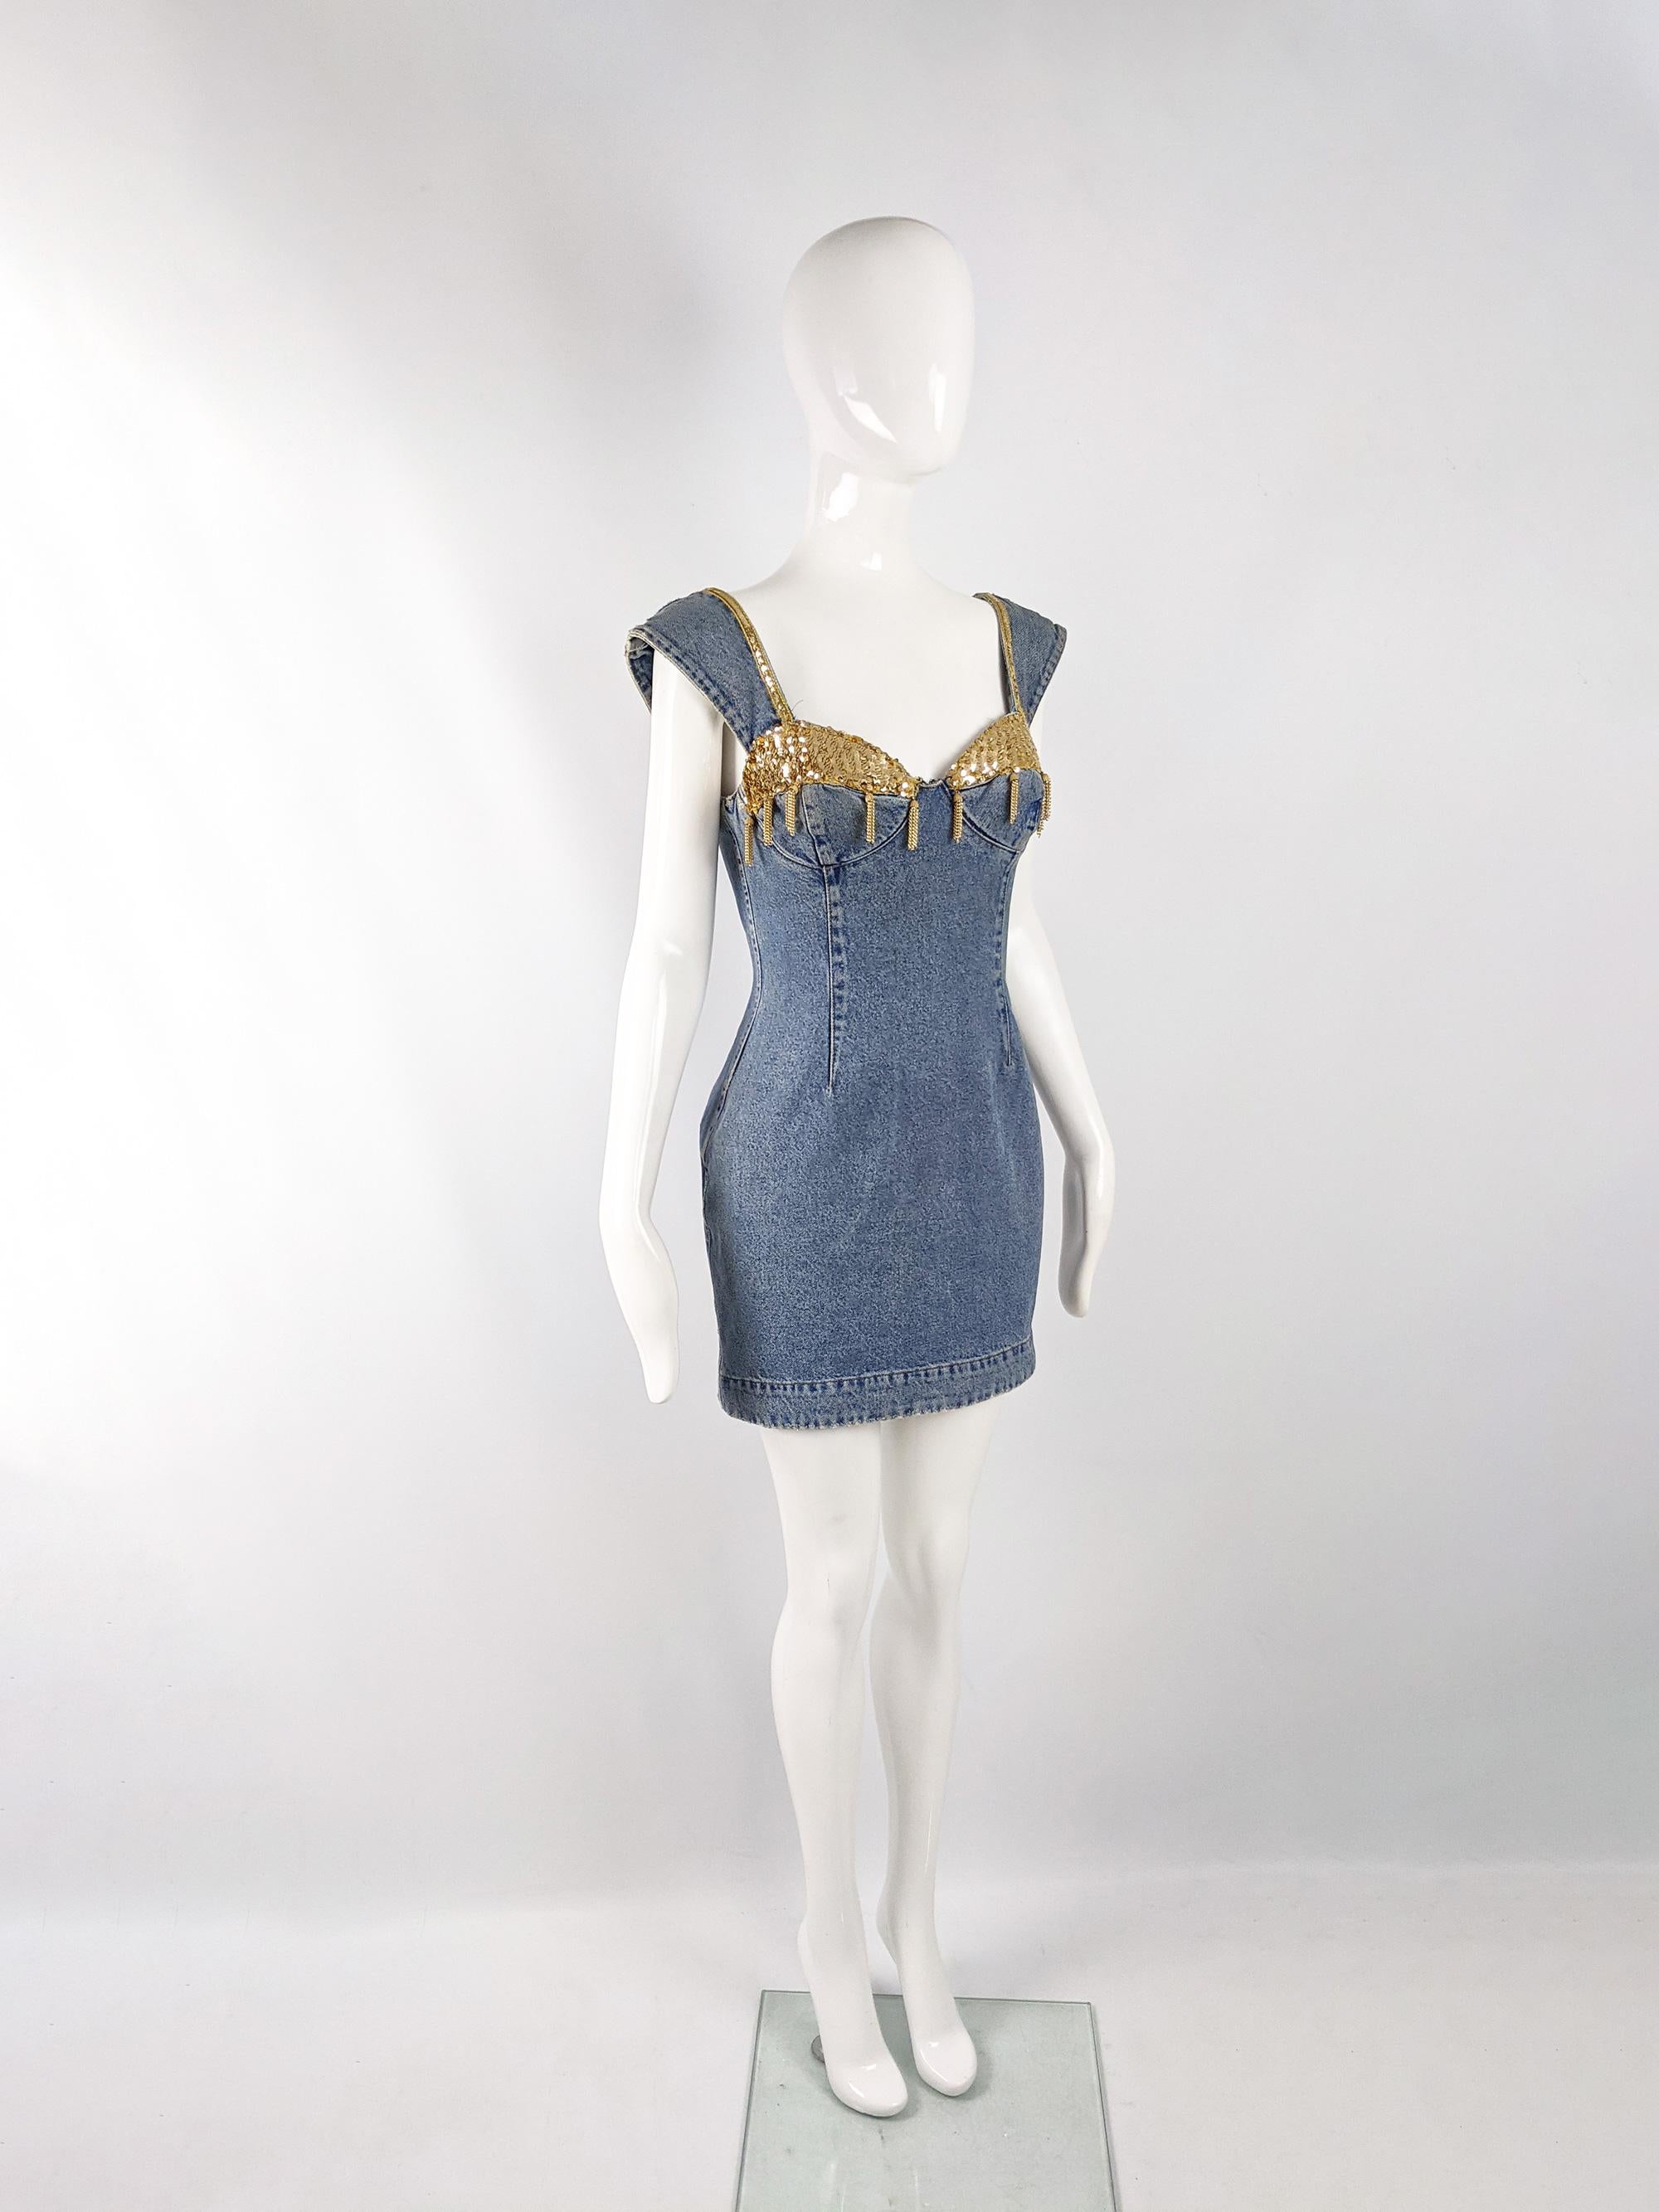 Women's Katherine Hamnett Vintage 1980s Beaded & Sequin Denim Dress